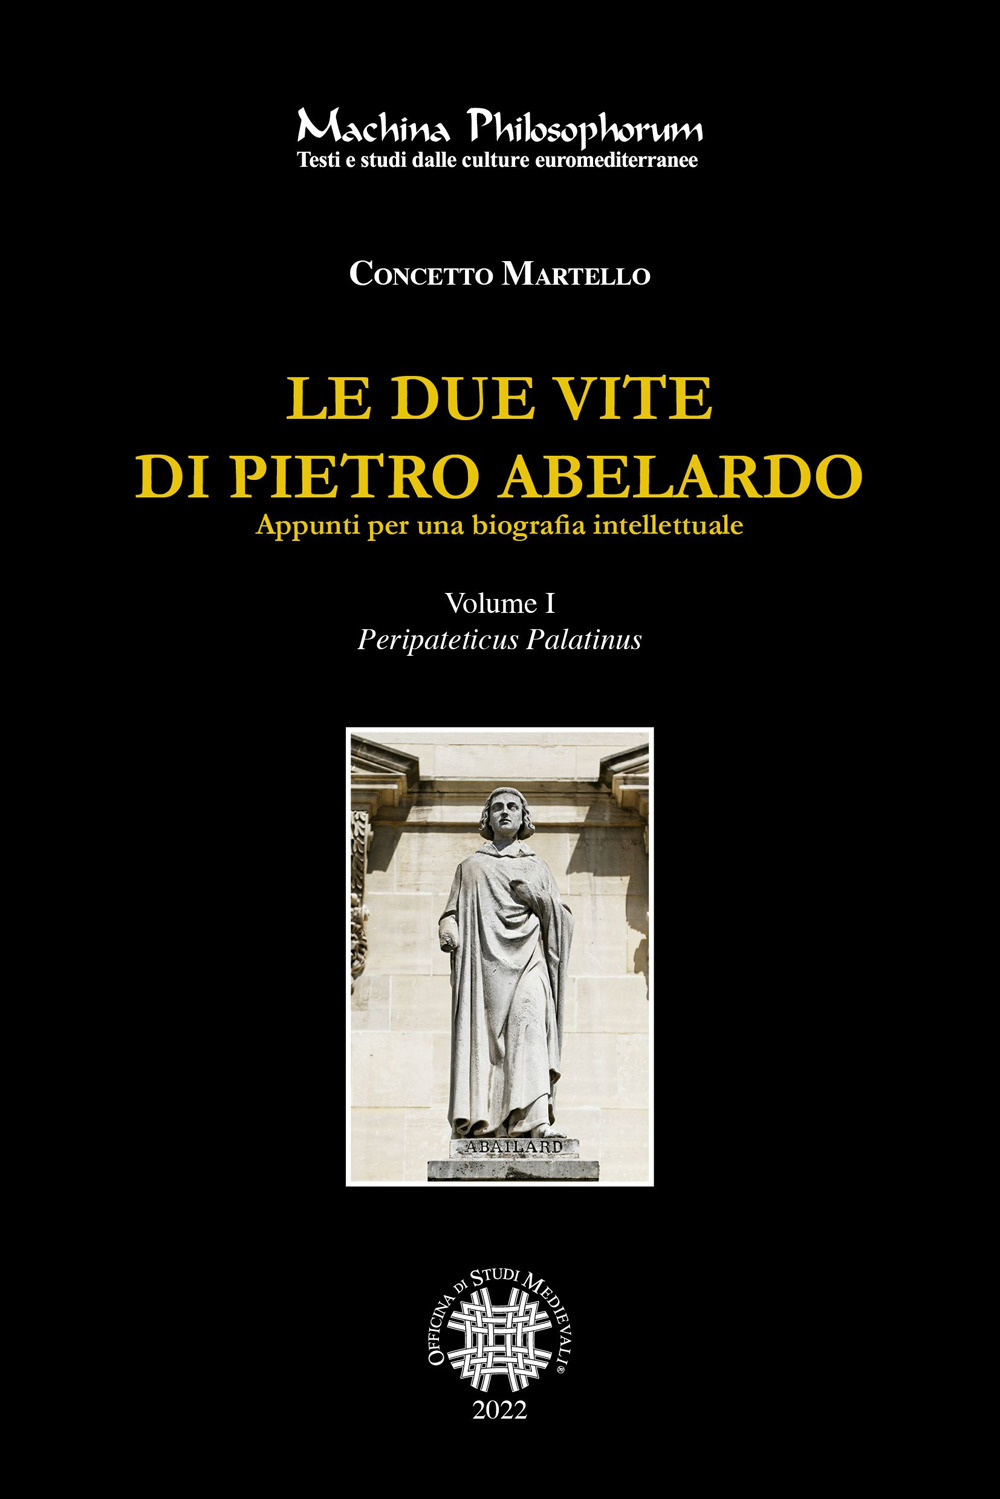 Le due vite di Pietro Abelardo. Appunti per una biografia intellettuale. Vol. 1: Peripateticus Palatinus